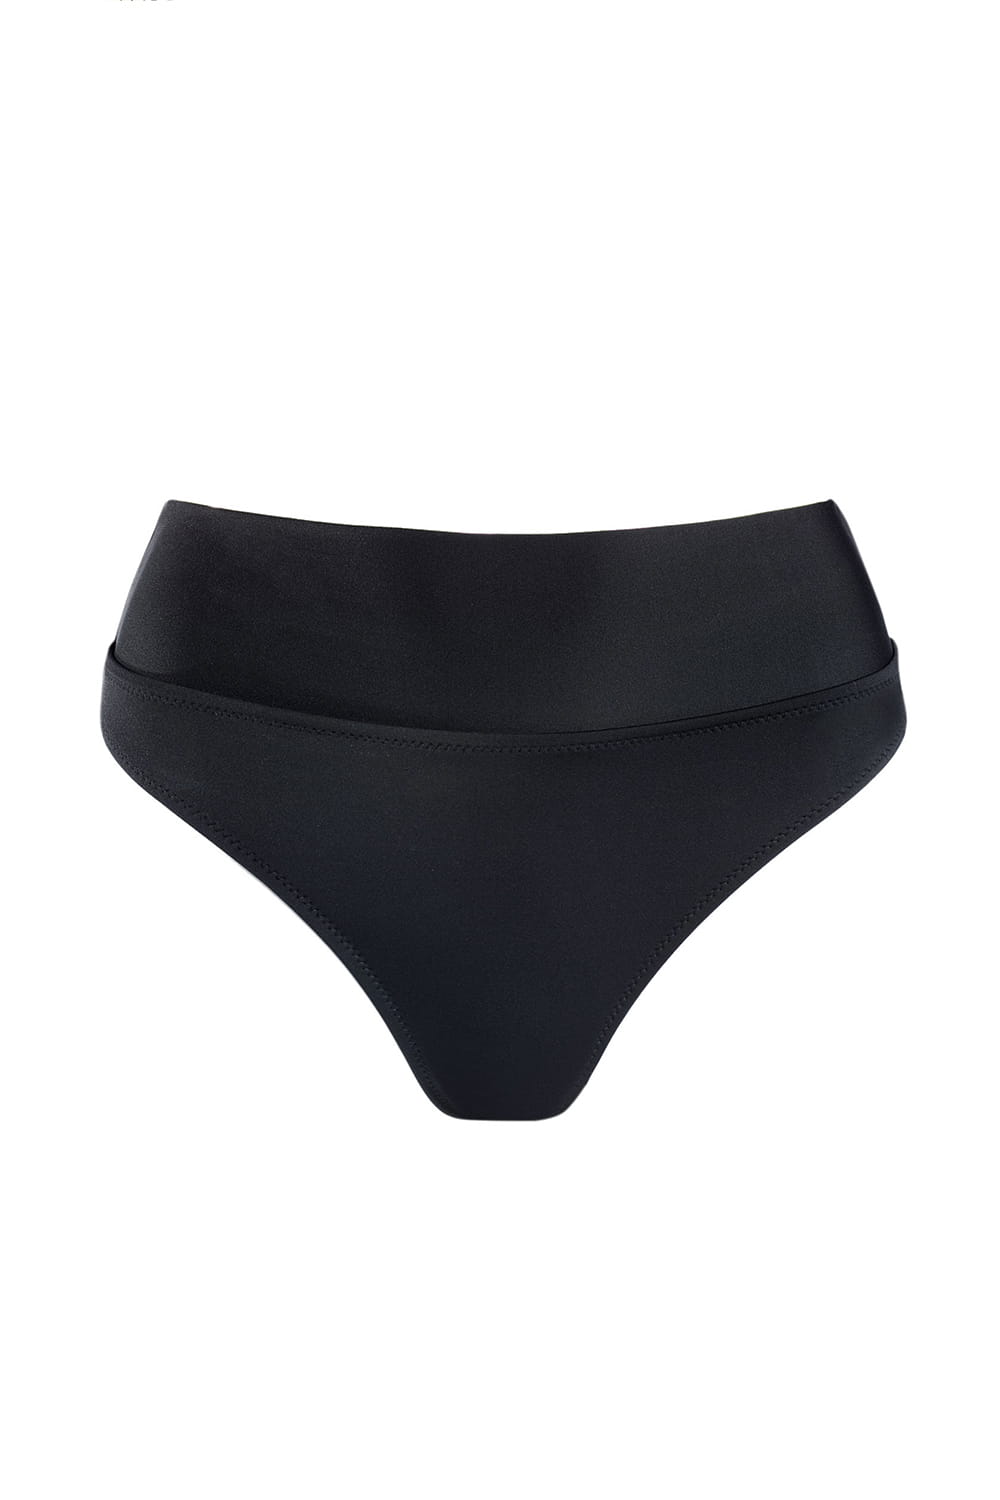 Luxury Swimwear F114 High Waisted Bikini Bottom Black